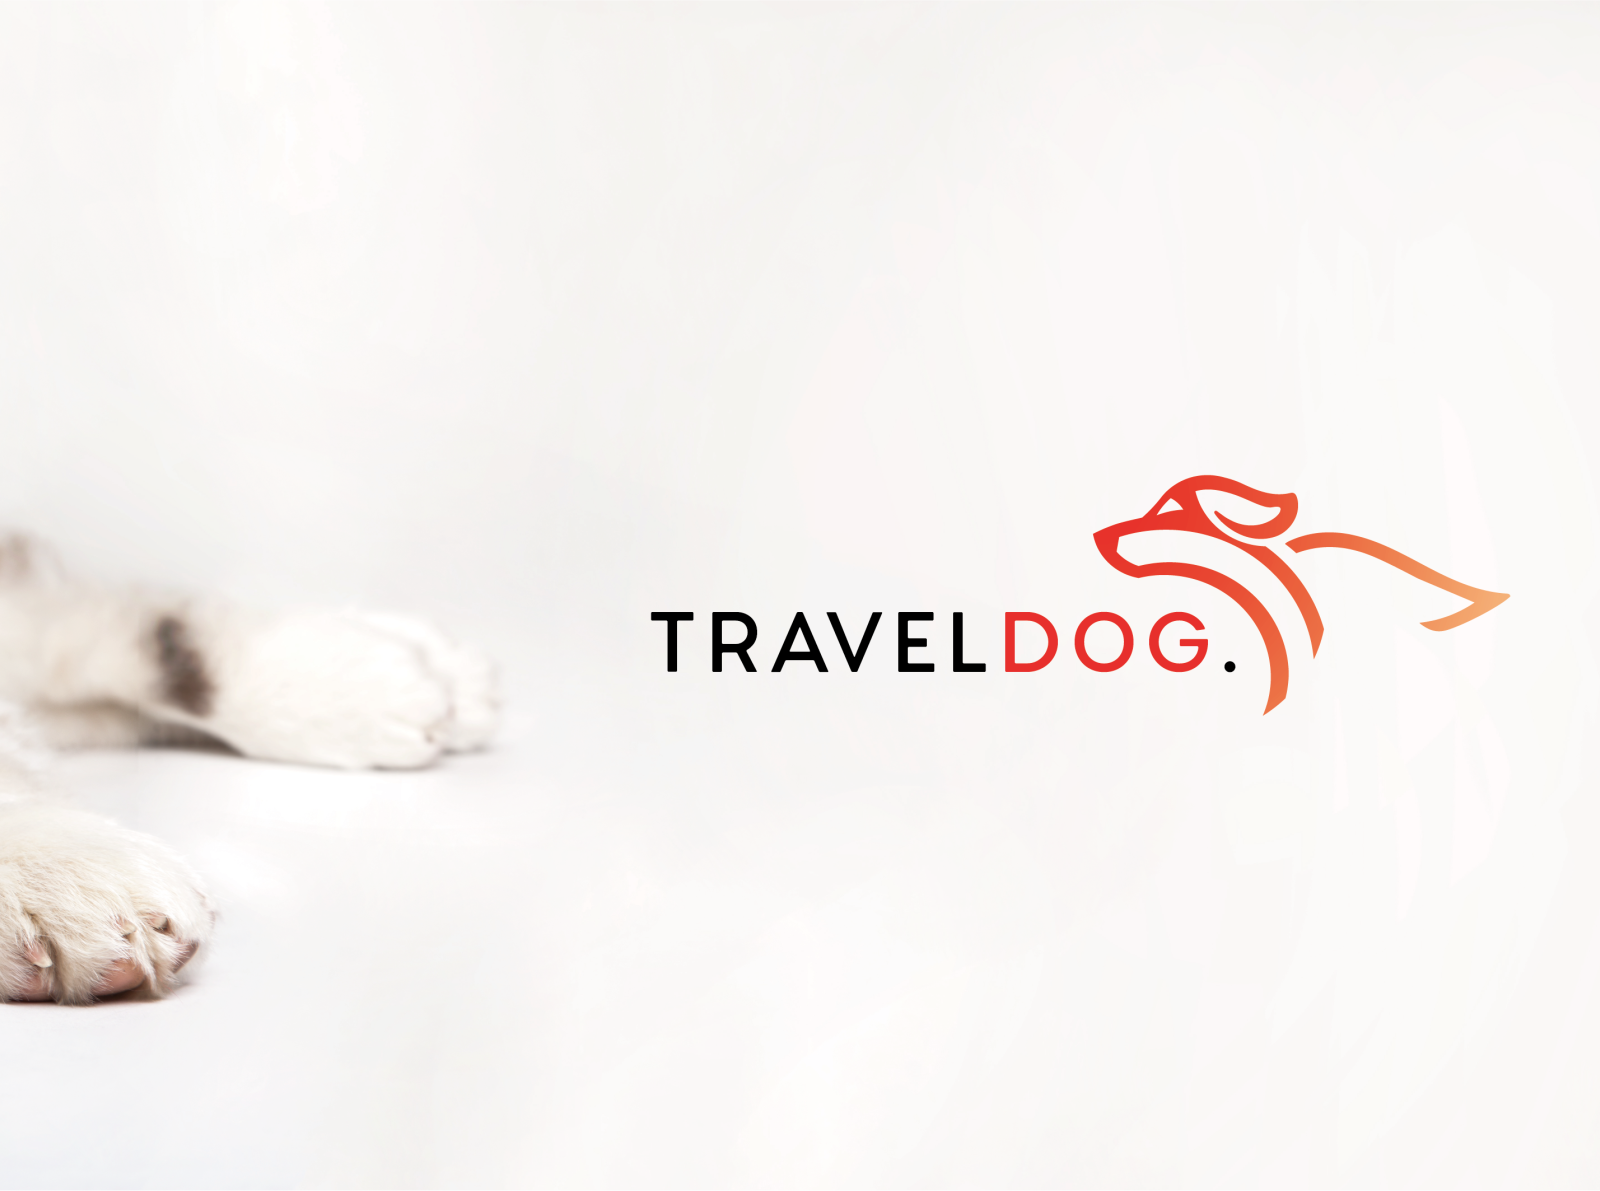 travel insurance dog logo